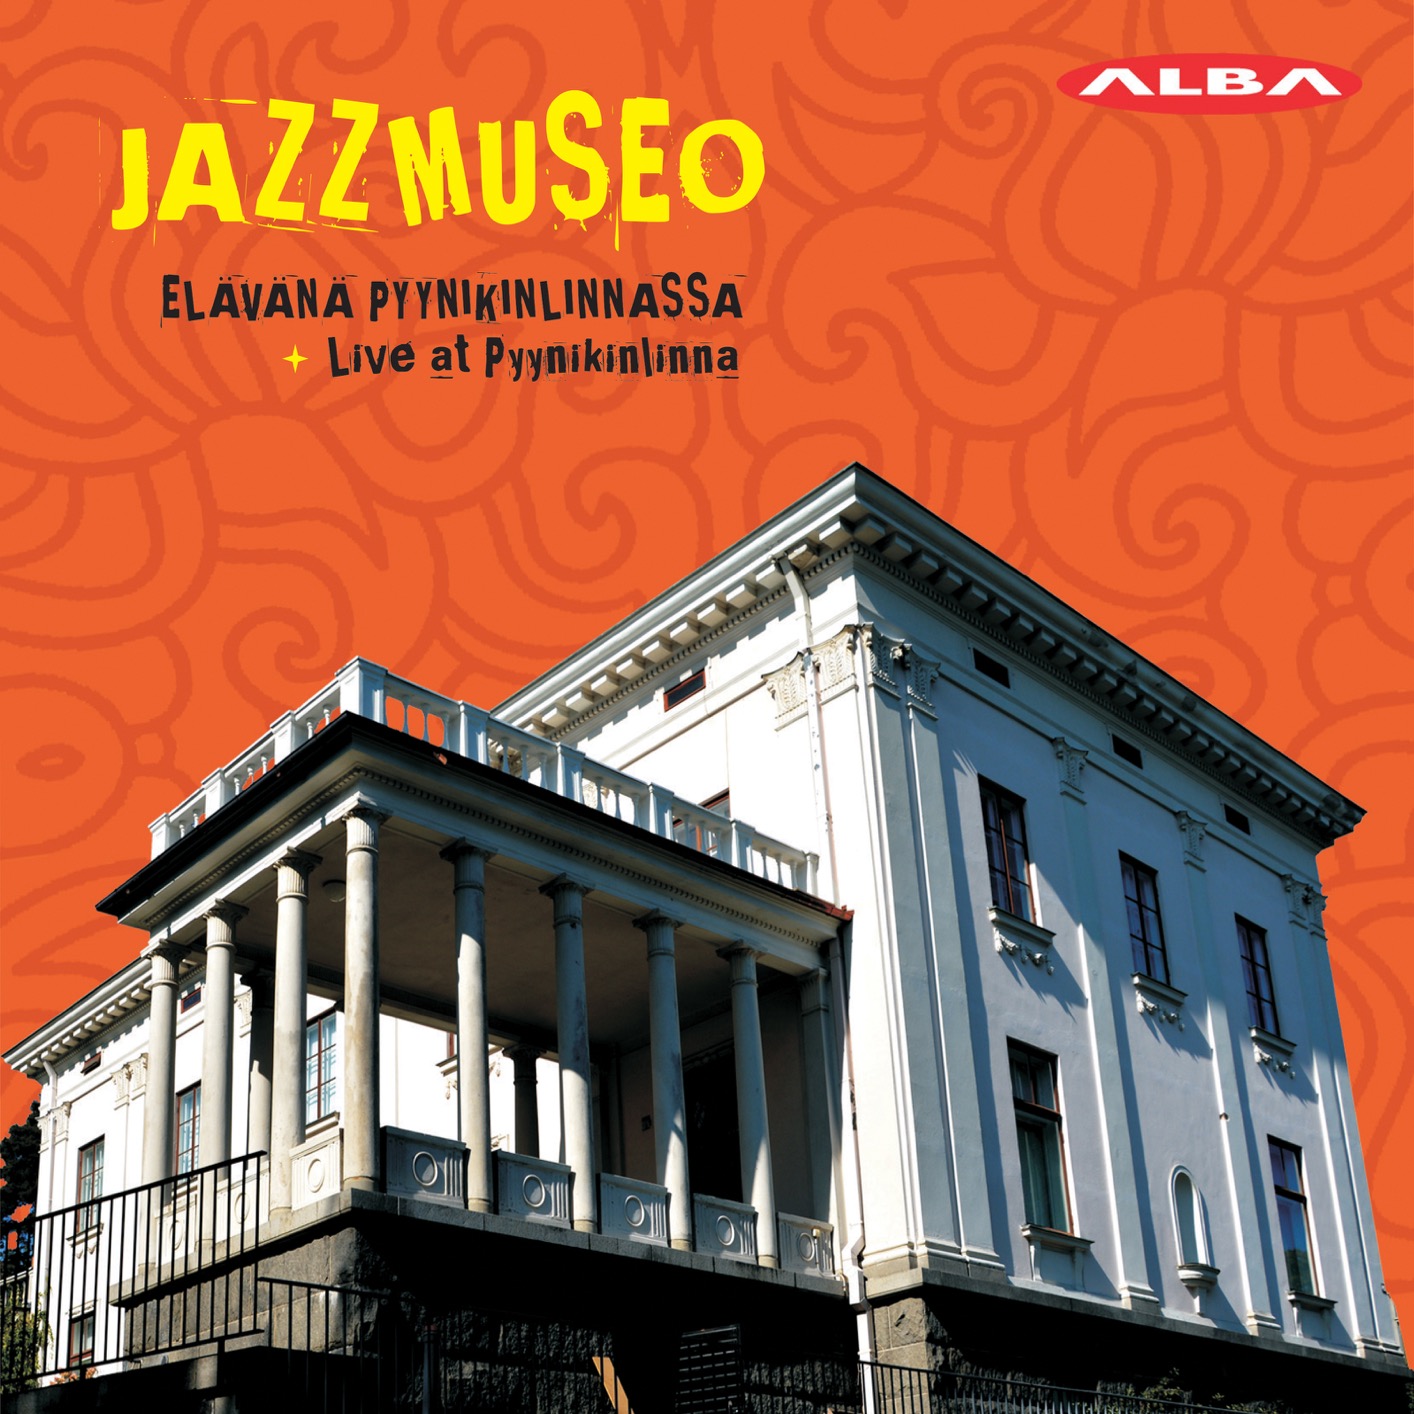 Jazzmuseo – Elavana Pyynikinlinnassa (Live) (2019) [FLAC 24bit/48kHz]